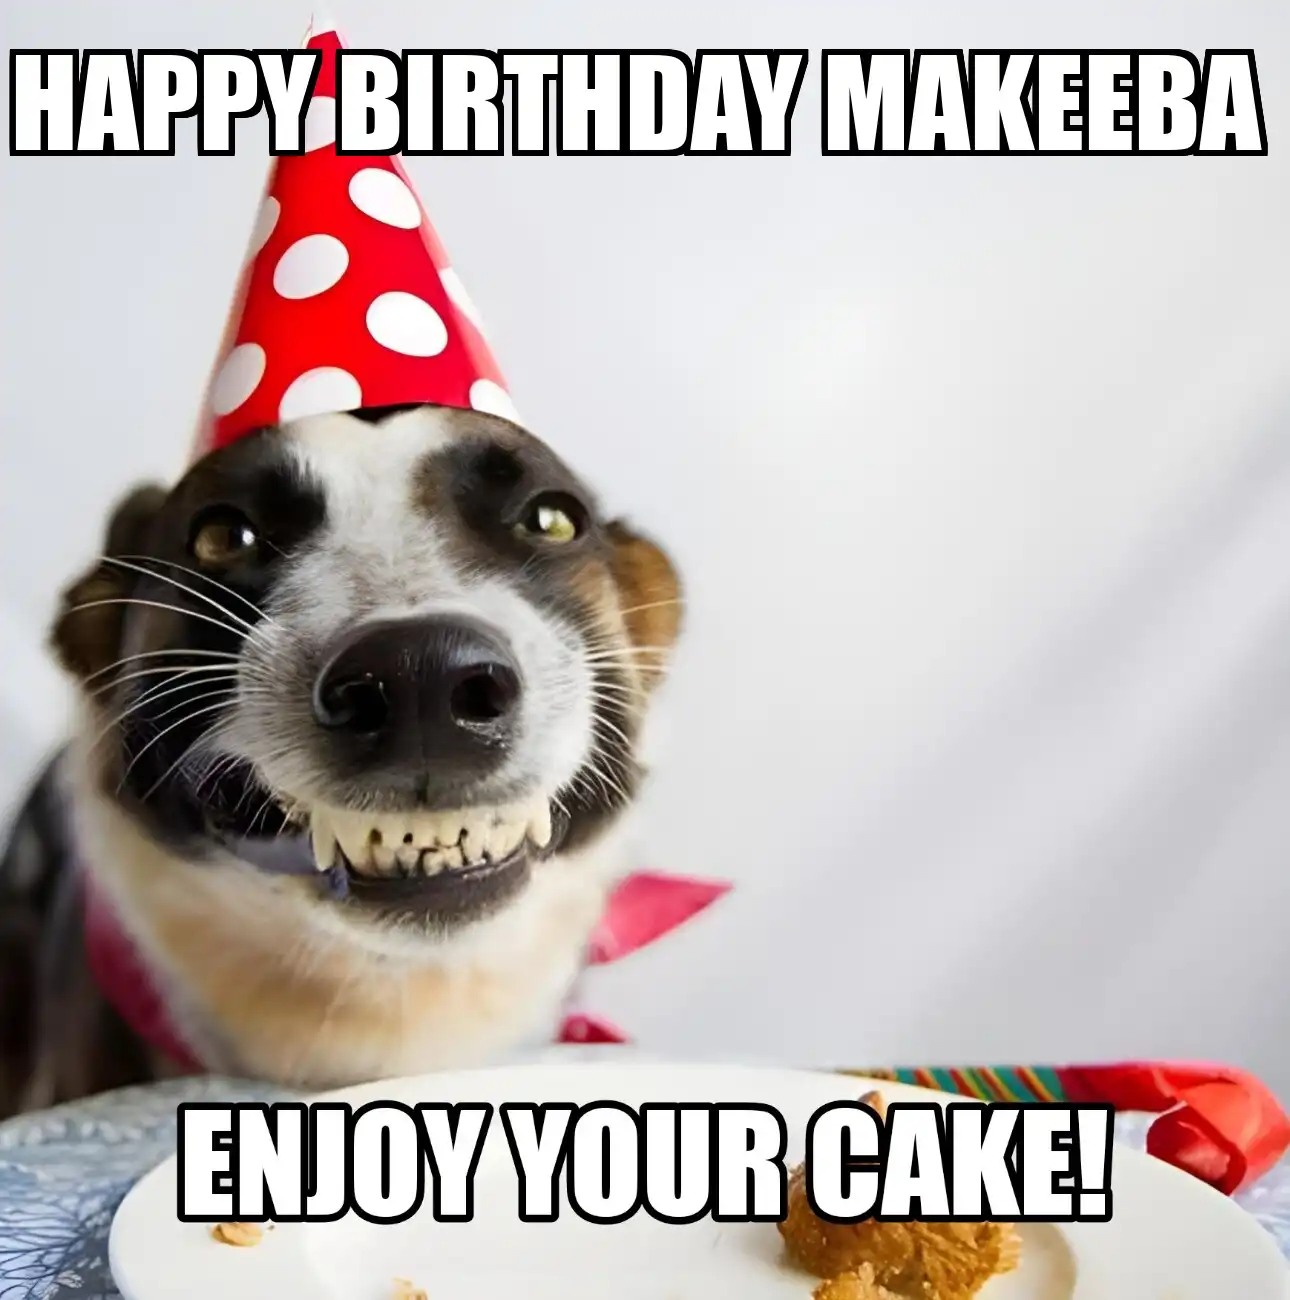 Happy Birthday Makeeba Enjoy Your Cake Dog Meme